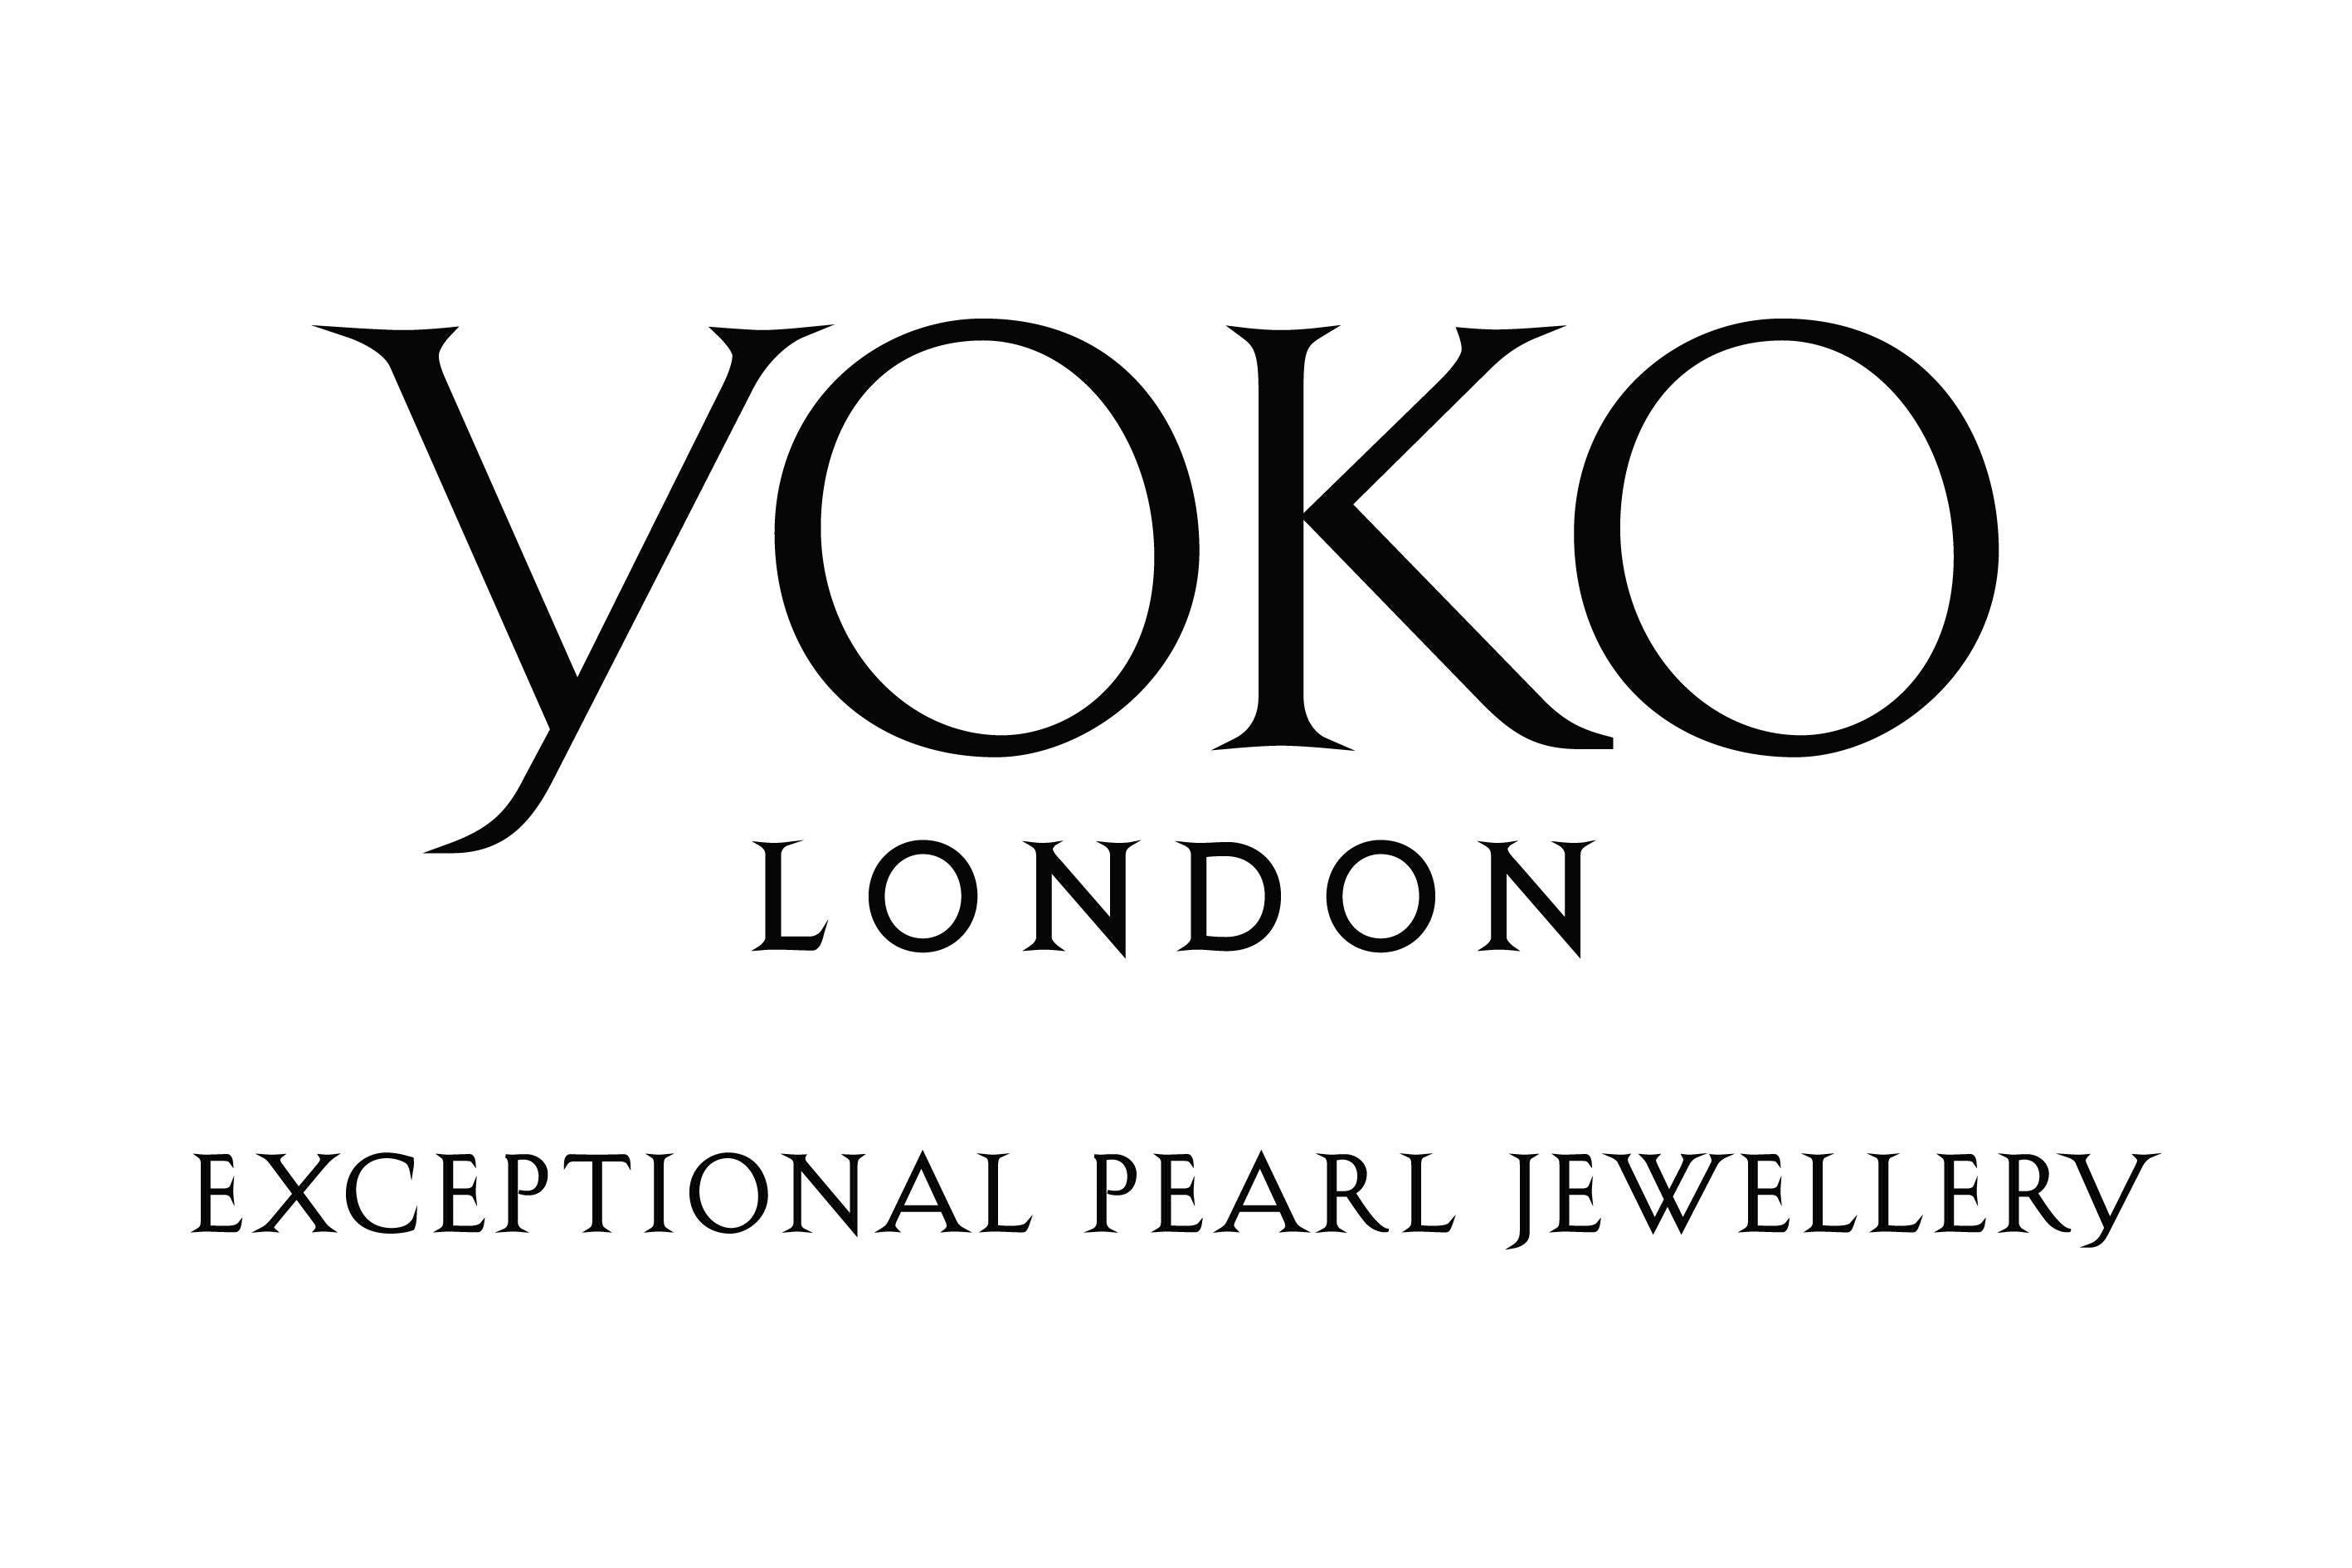 Modern Yoko London Tahitian Pearl and Diamond Ring in 18 Karat White Gold For Sale